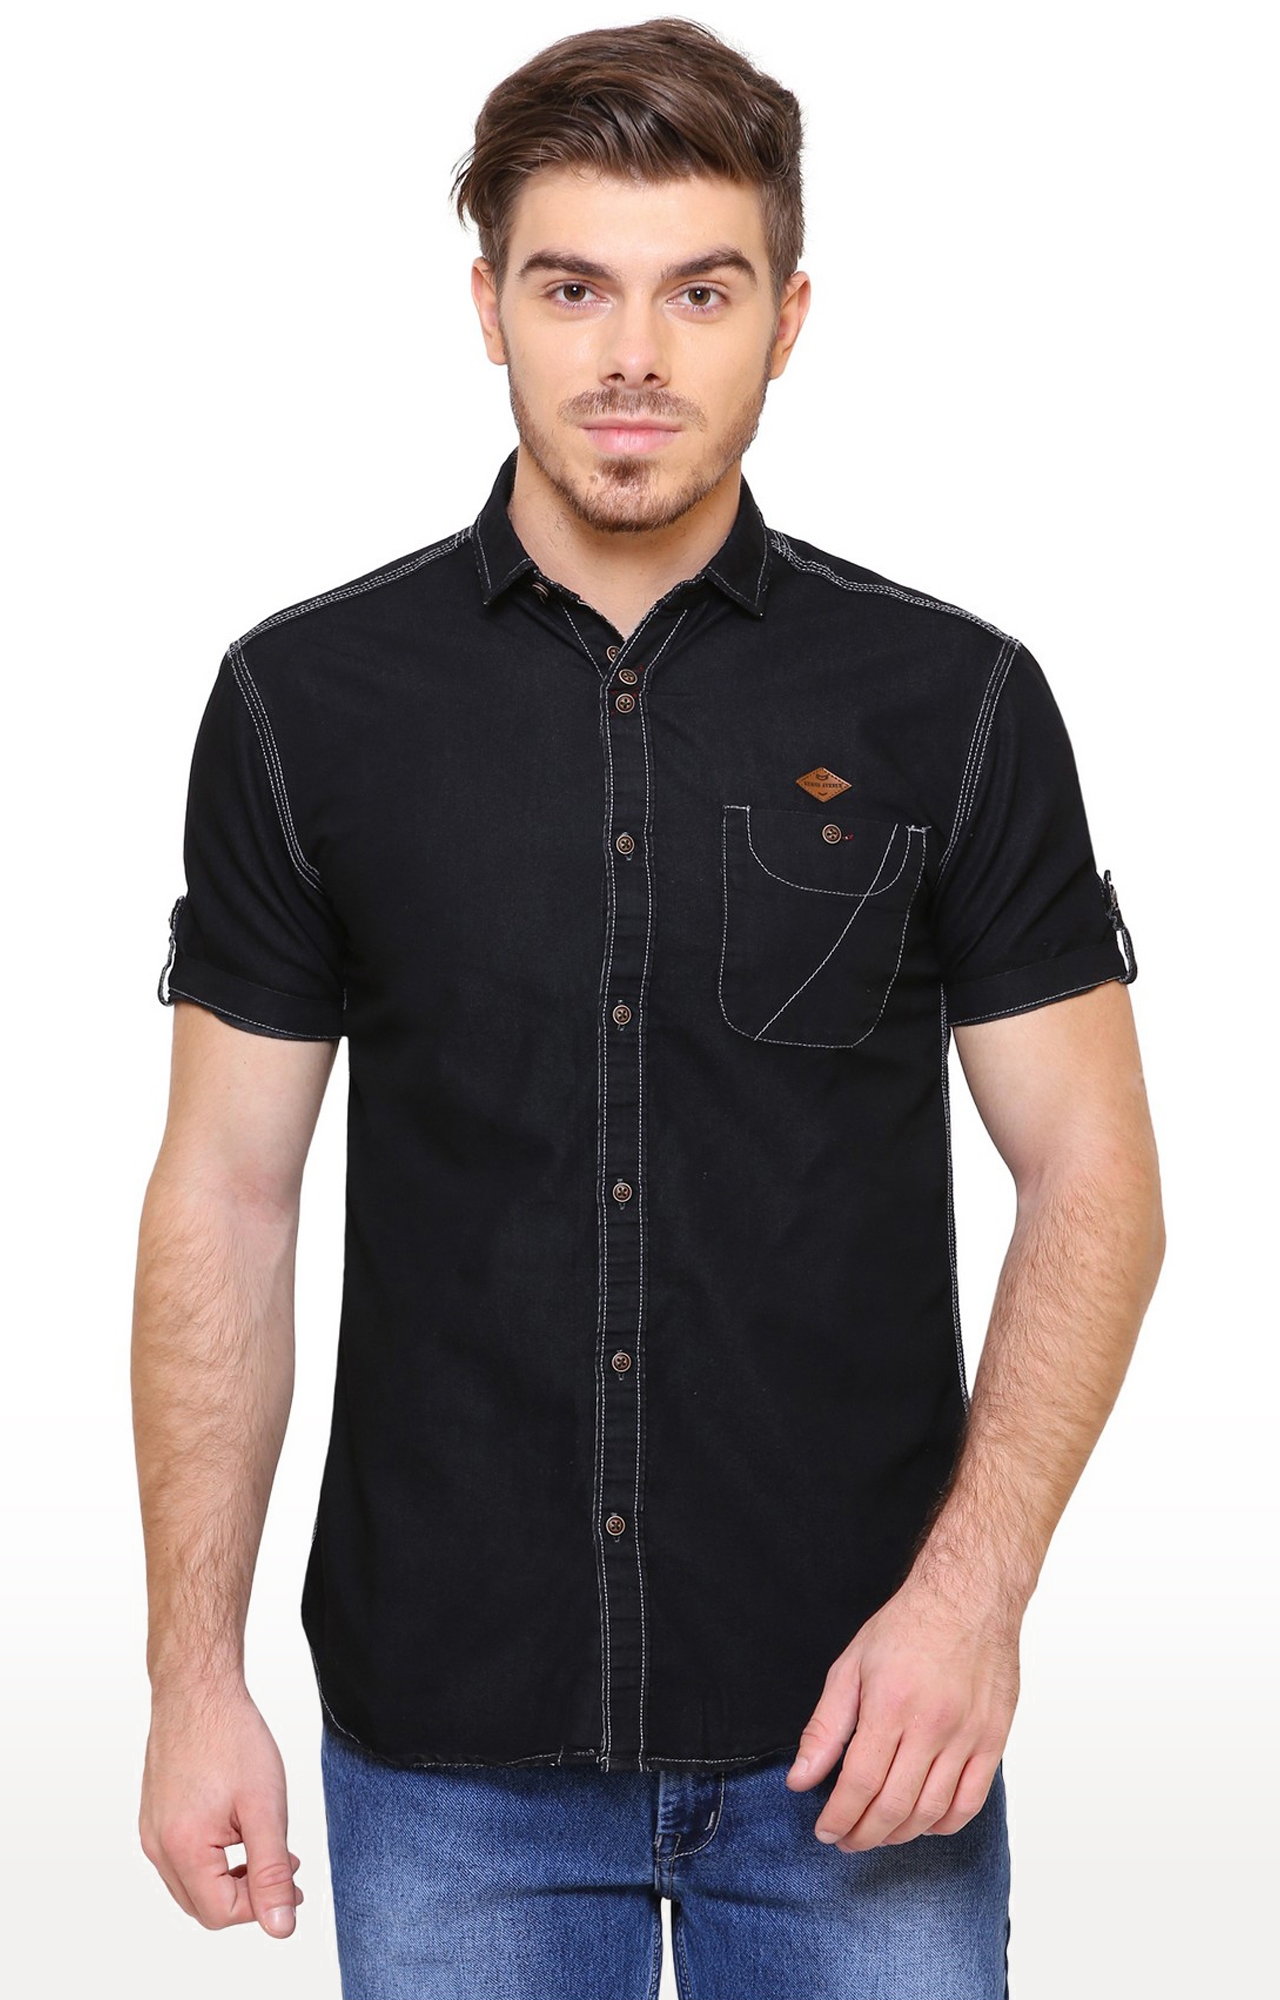 Kuons Avenue | Kuons Avenue Men's Black Half Sleeve Denim Shirt